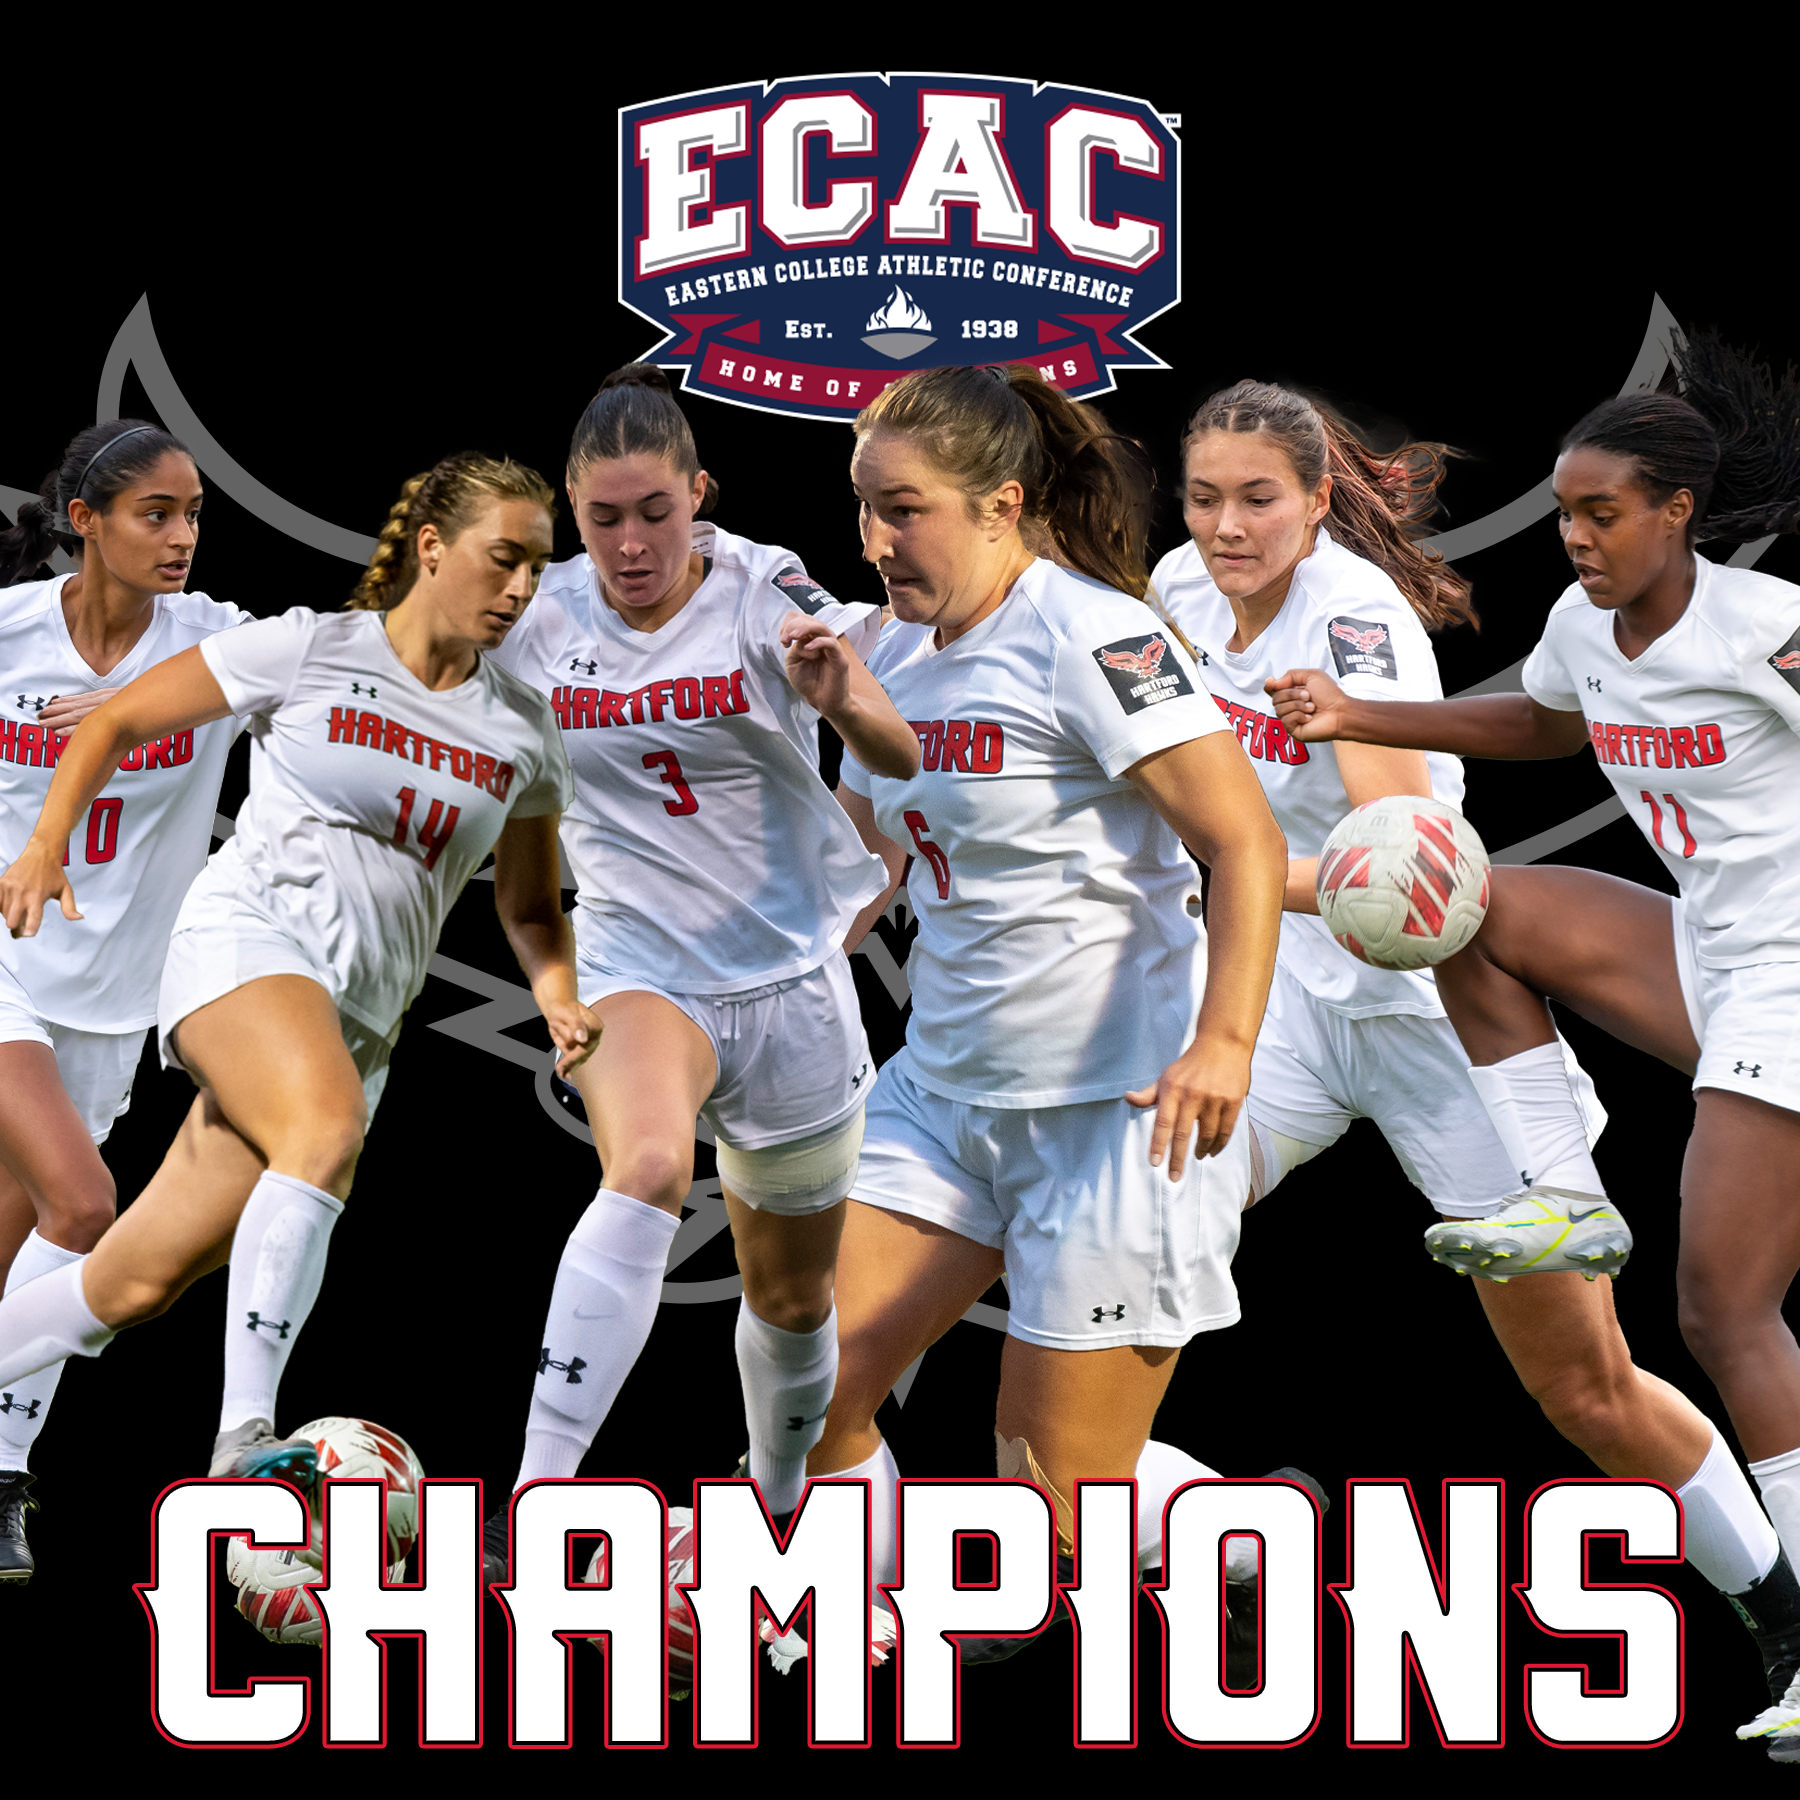 ECAC champions image